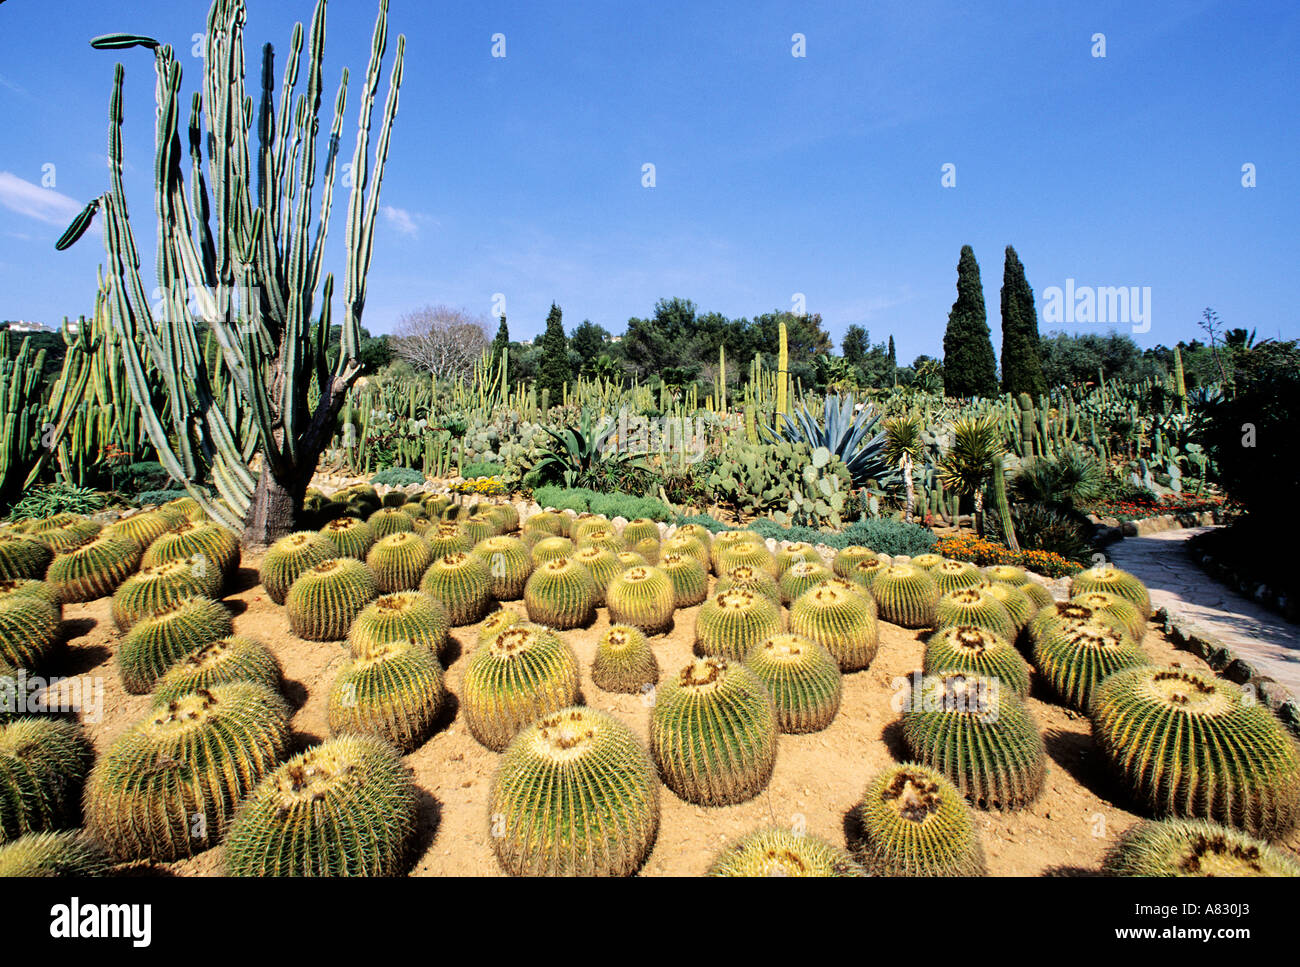 Spain, Costa Brava, collection of cactus, Pinya de rosa Stock Photo - Alamy